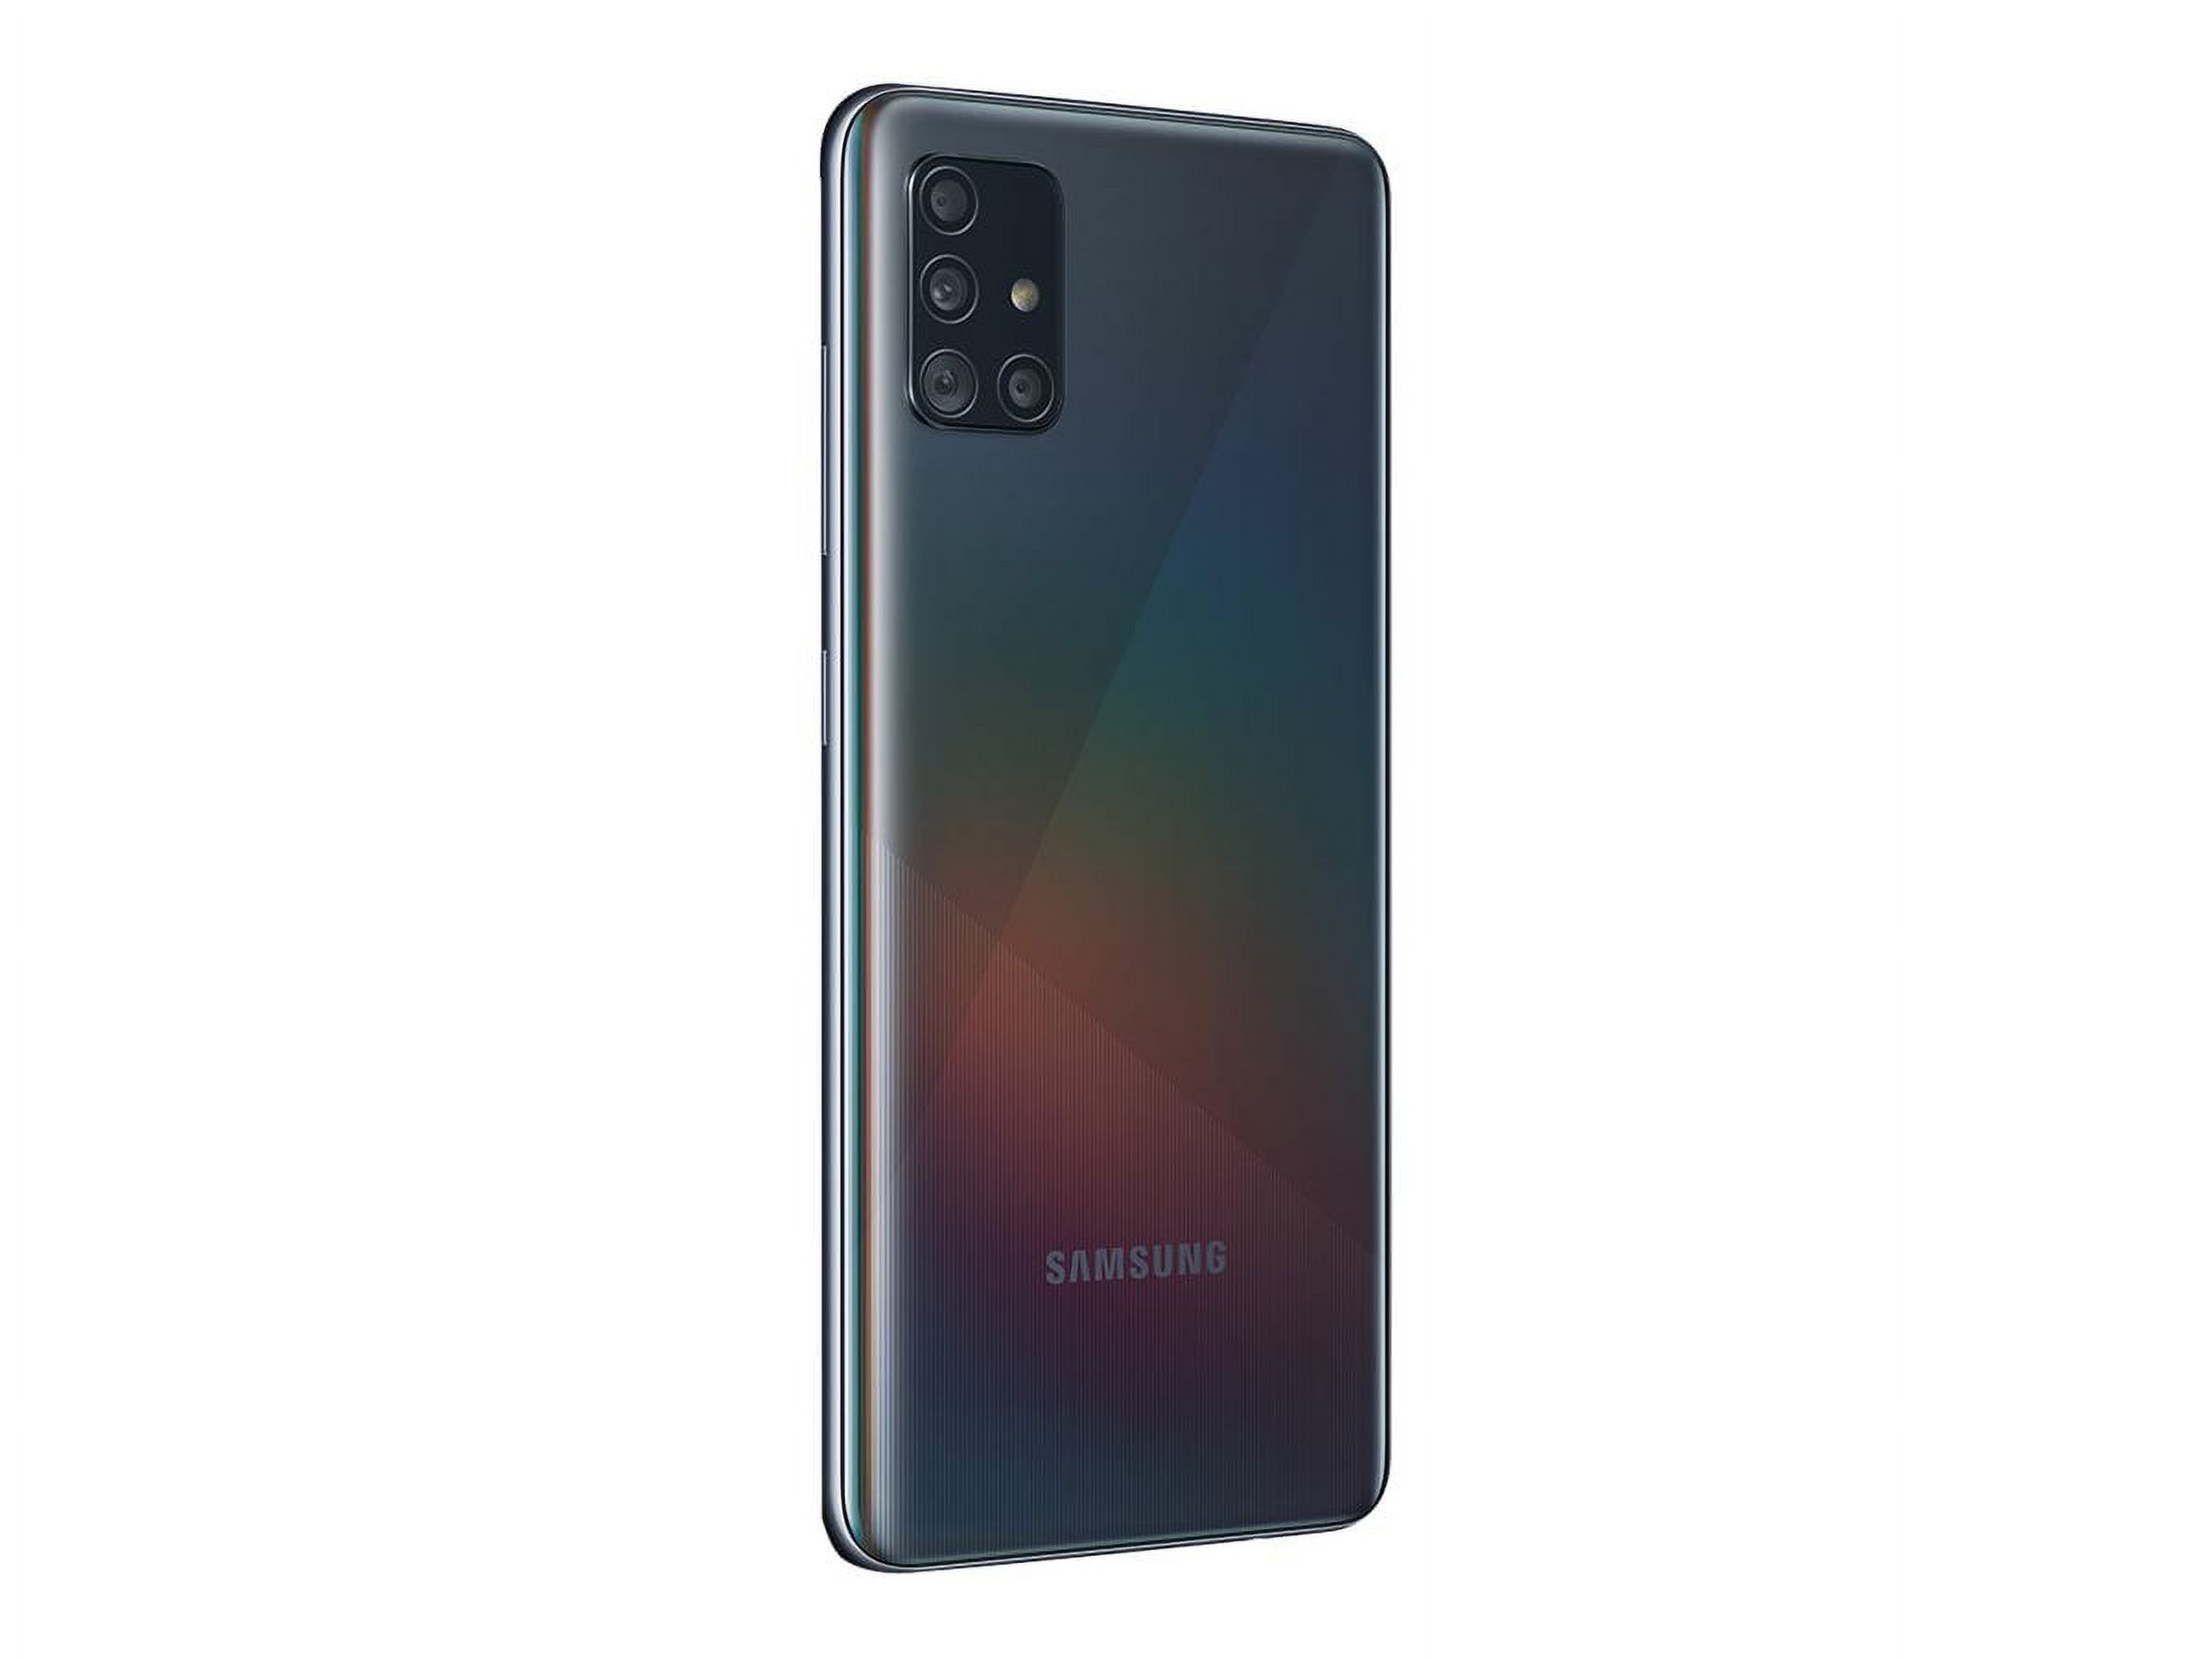 Samsung Galaxy A51 - Smartphone - 4G LTE - 128 GB - microSD slot - 6.5" - 2400 x 1080 pixels - Super AMOLED - RAM 4 GB (32 MP front camera) - 4x rear cameras - Android - Sprint - Prism crush black - image 3 of 7